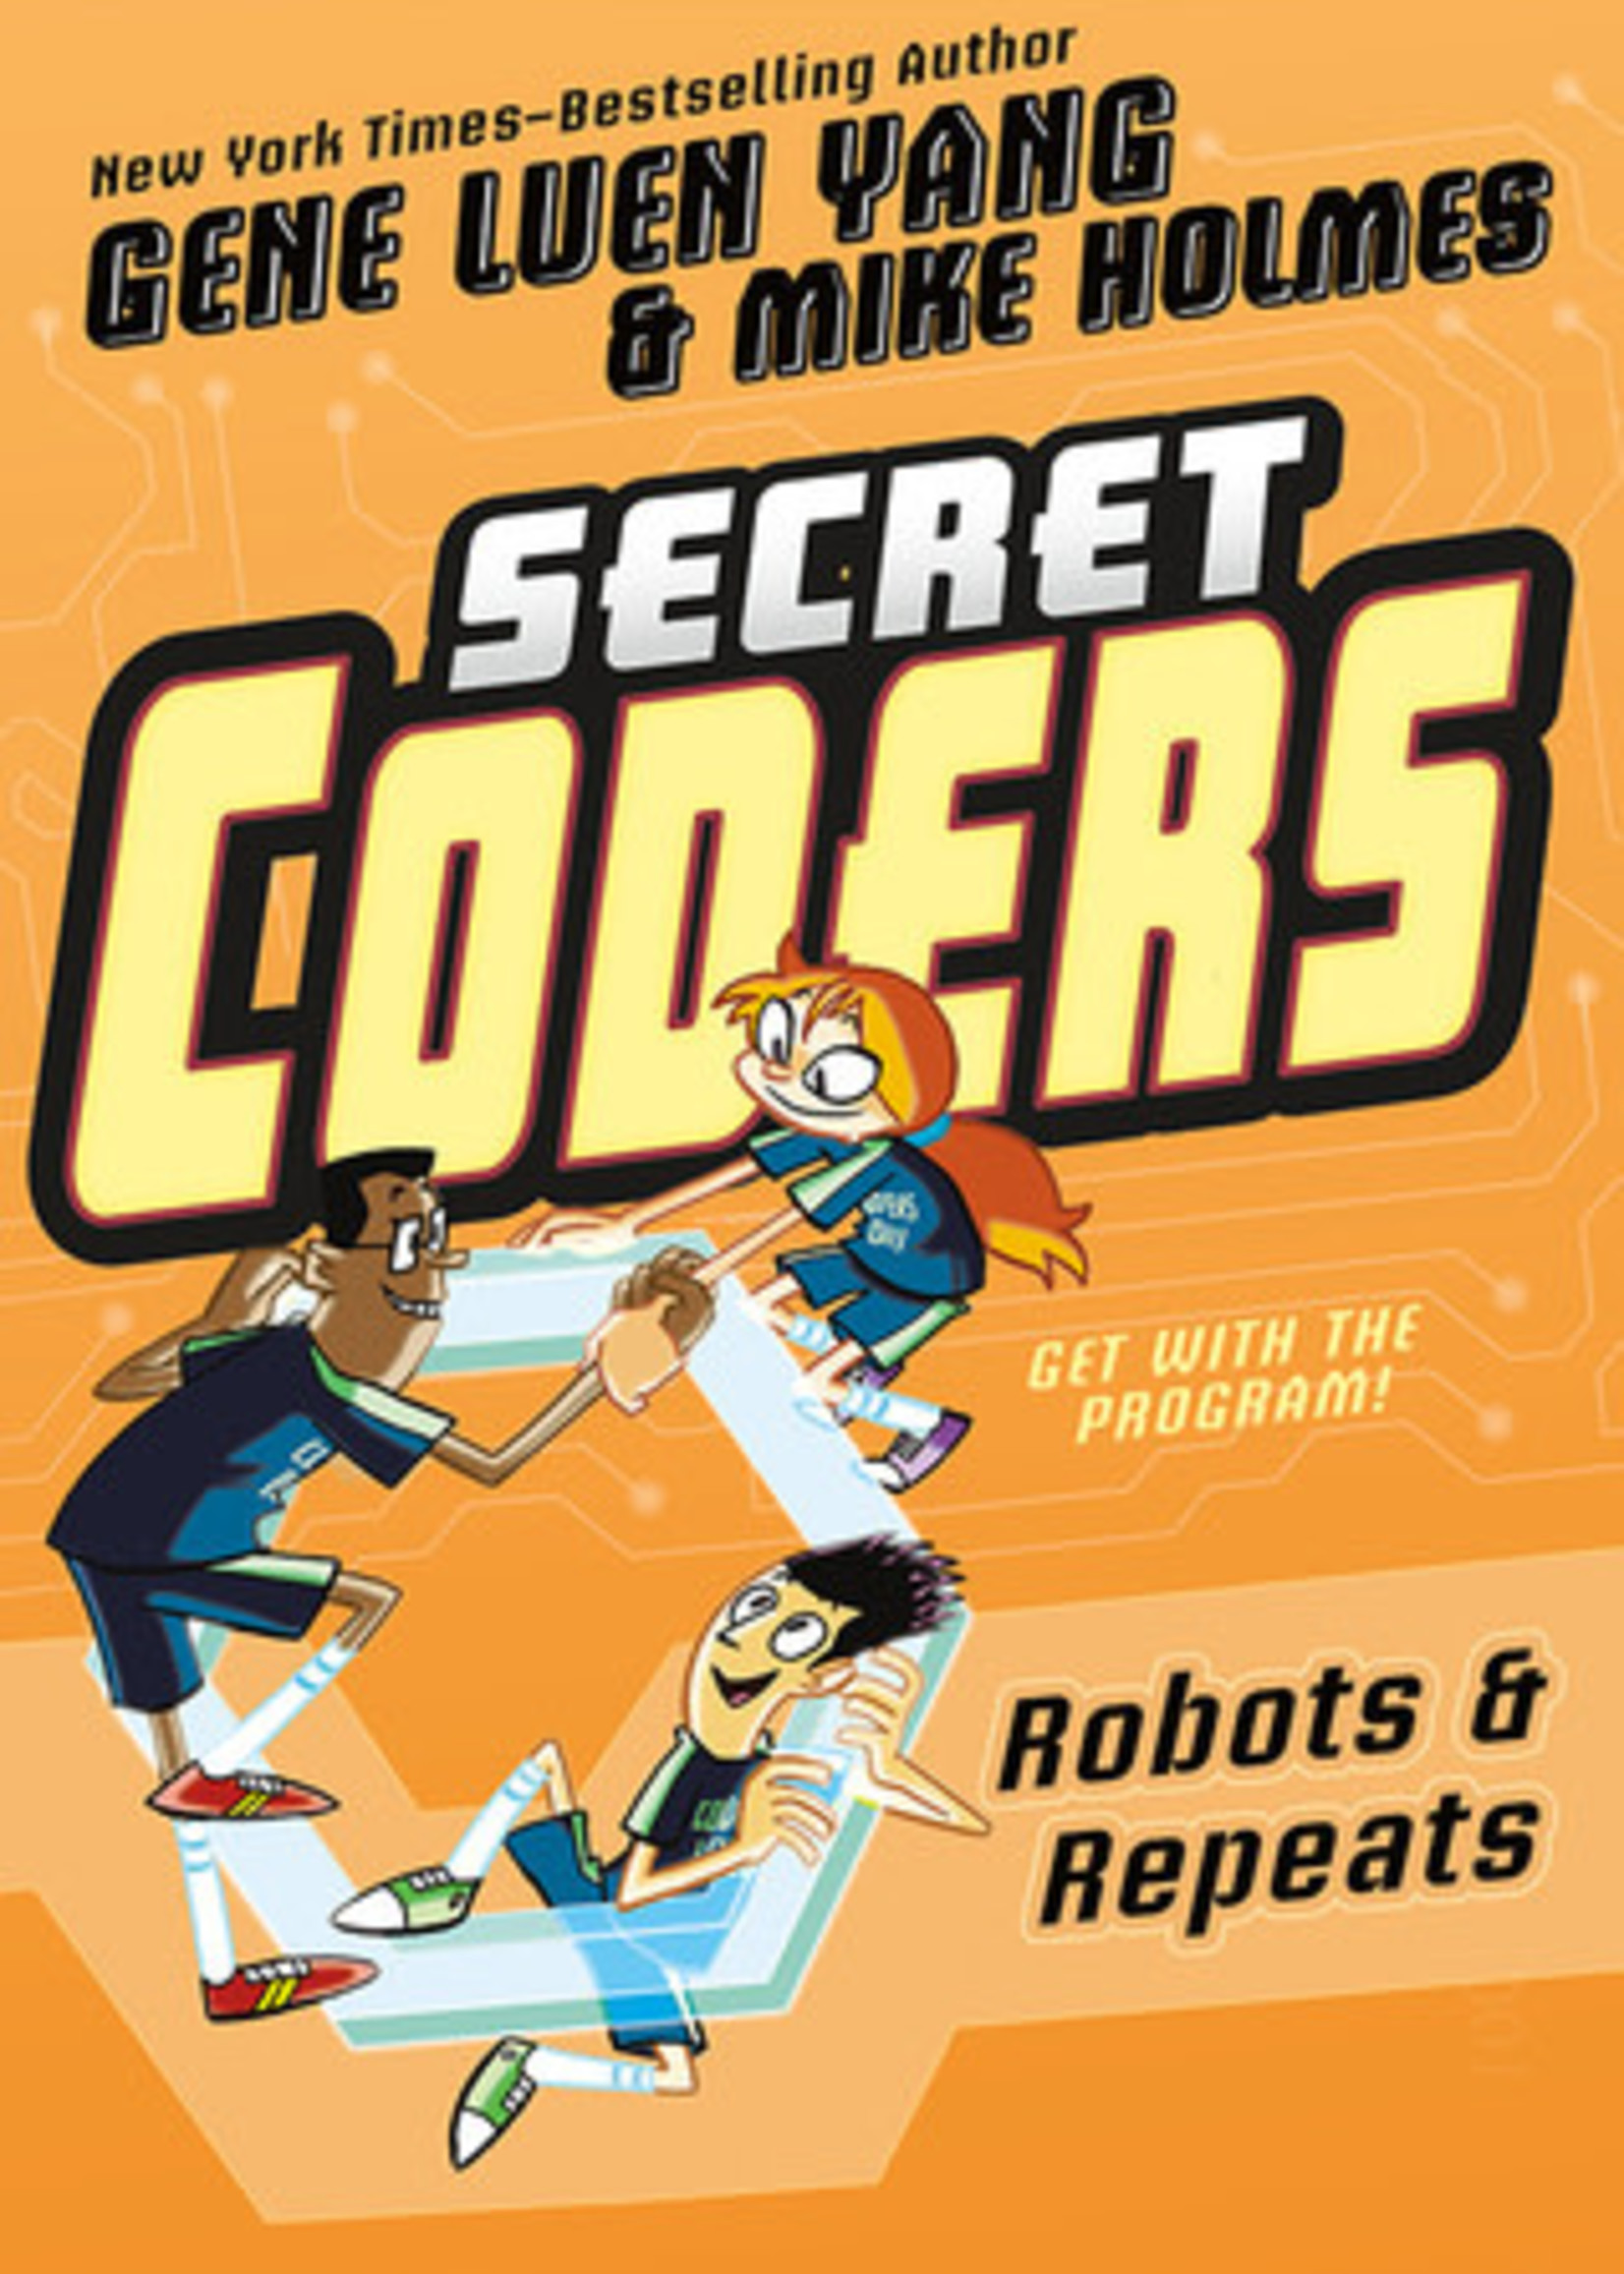 Robots & Repeats (Secret Coders #4) by Gene Luen Yang, Mike Holmes